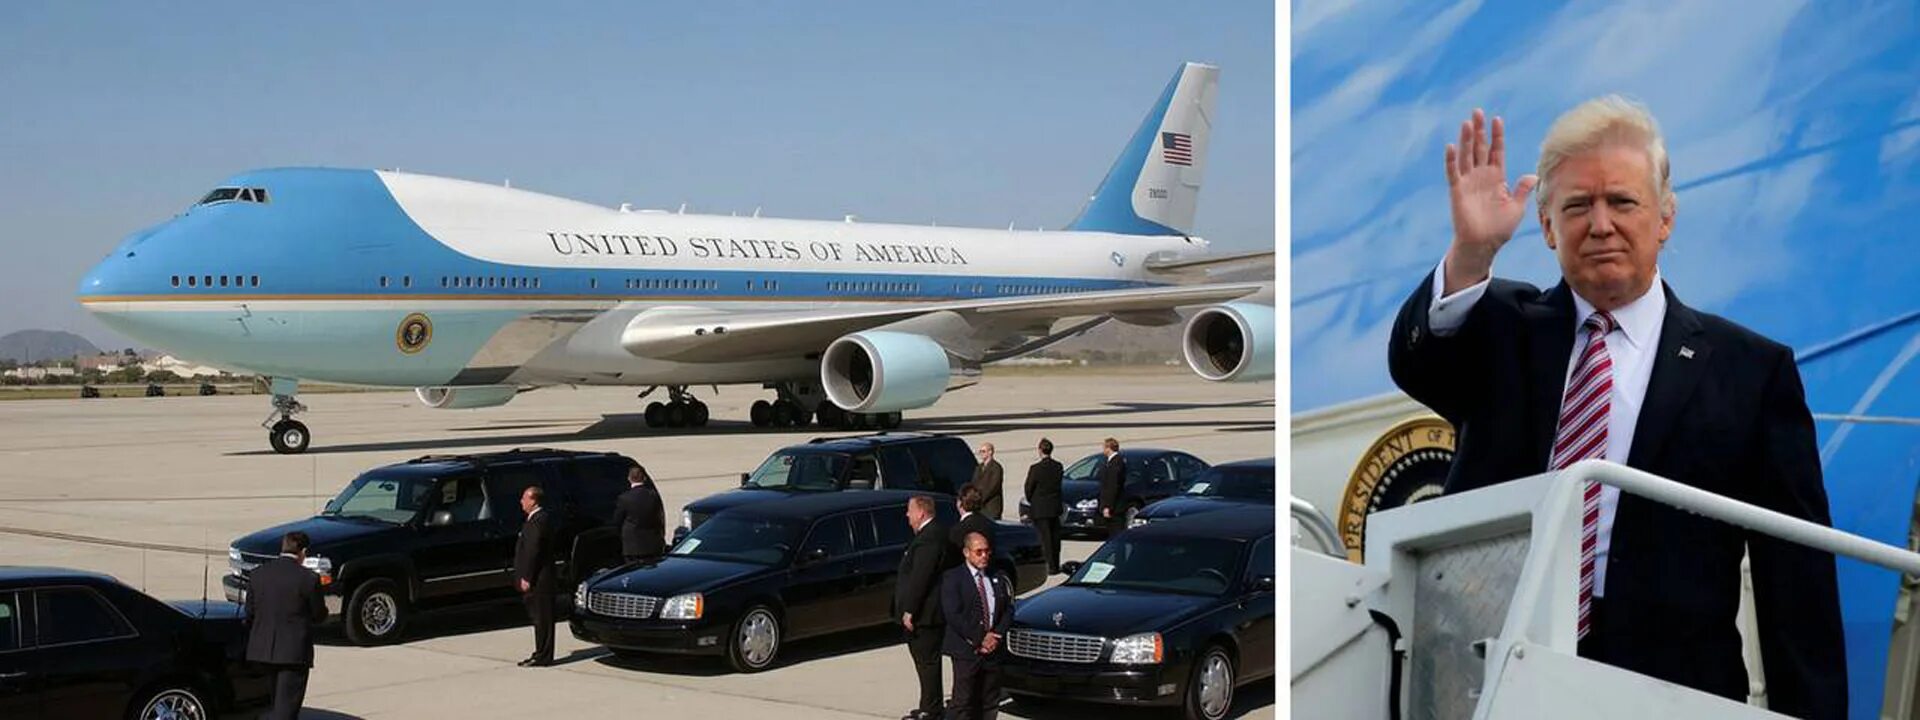 Самолет глав стран. Боинг 747 президента США. Борт 1 президента США. Самолет президента США Air Force one. Борт номер 1 президента Казахстана.